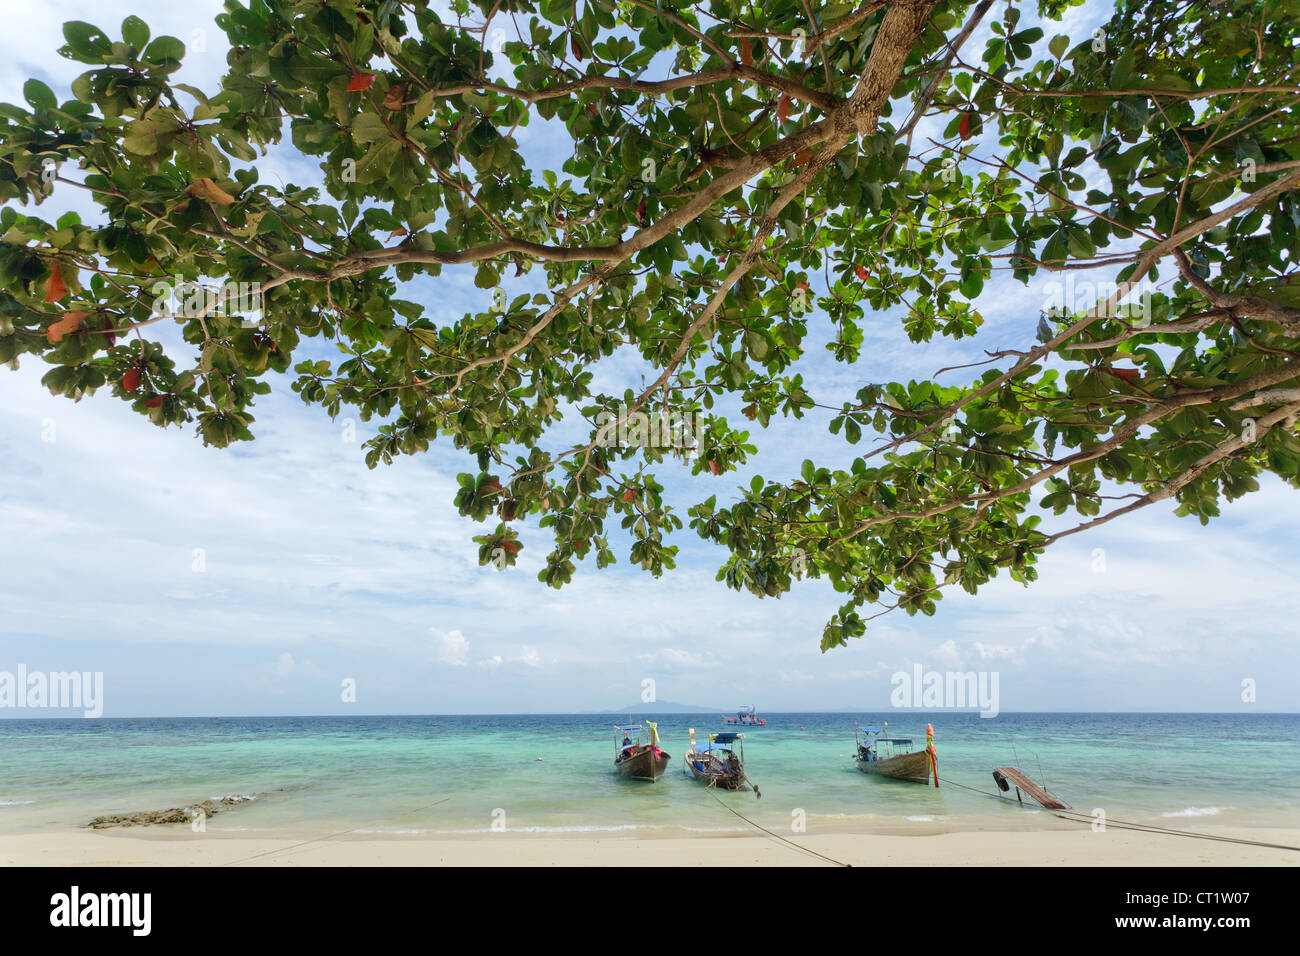 tropical beach with almond tree Terminalia catappa and long tail boats, ko phi phi, Thailand Stock Photo